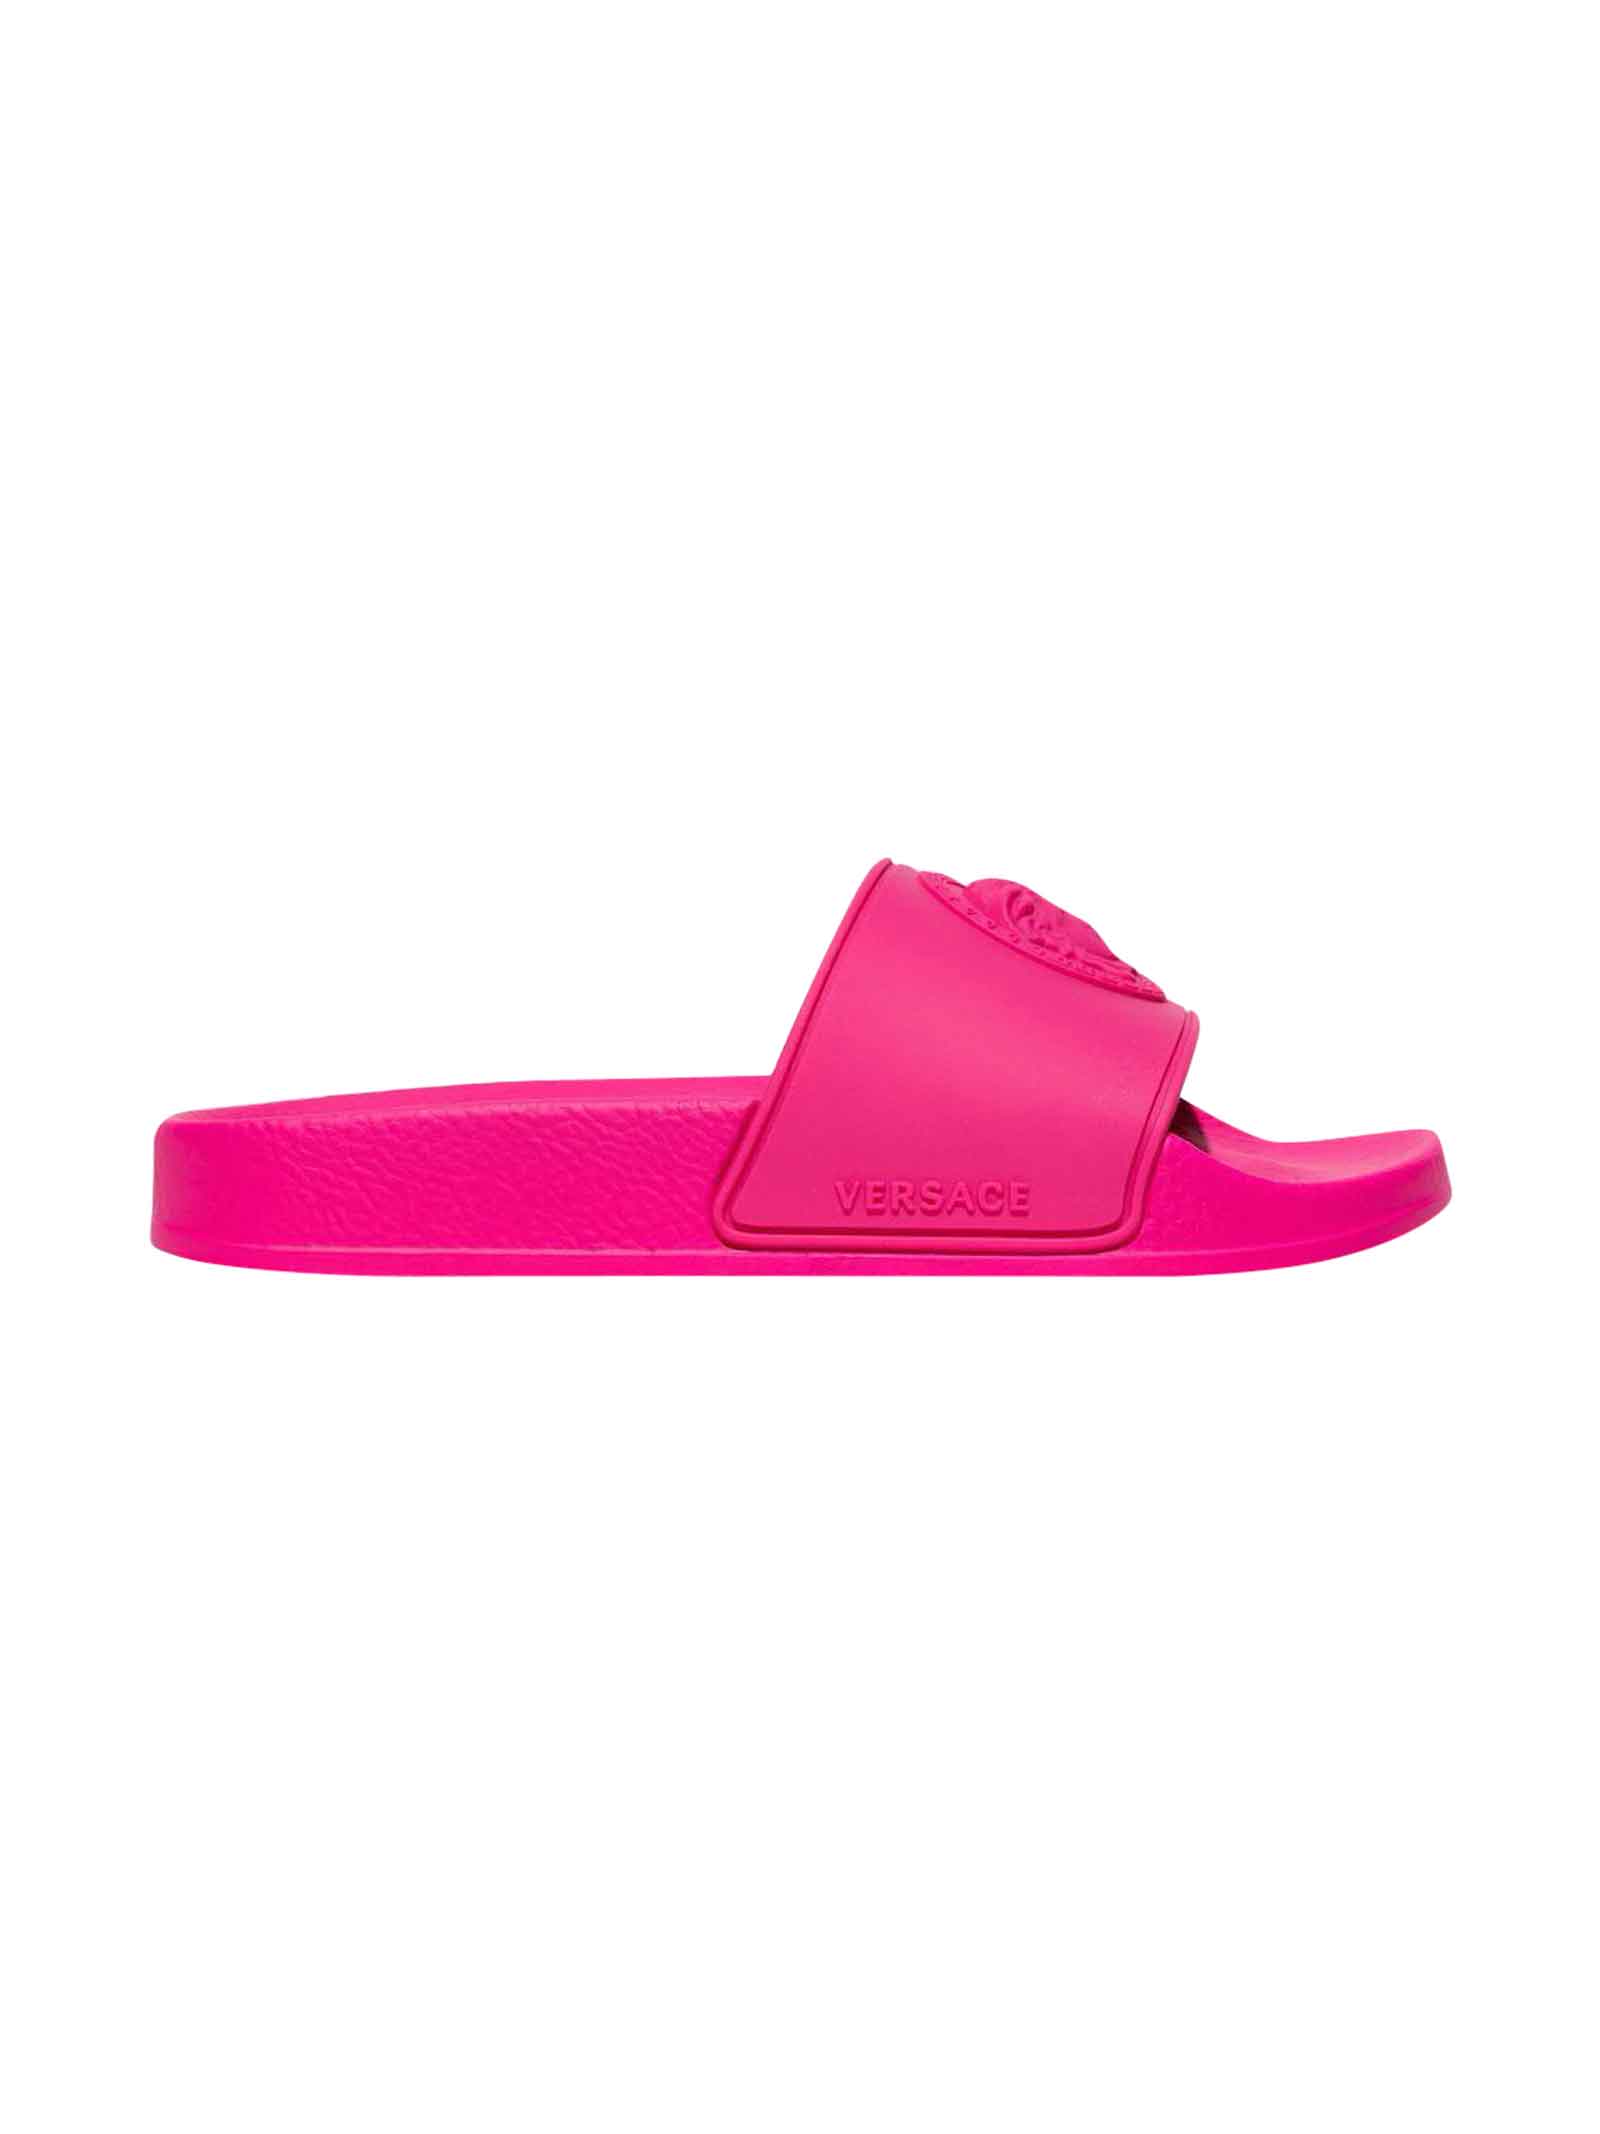 Versace Fuchsia Slide Sandals Unisex Kids